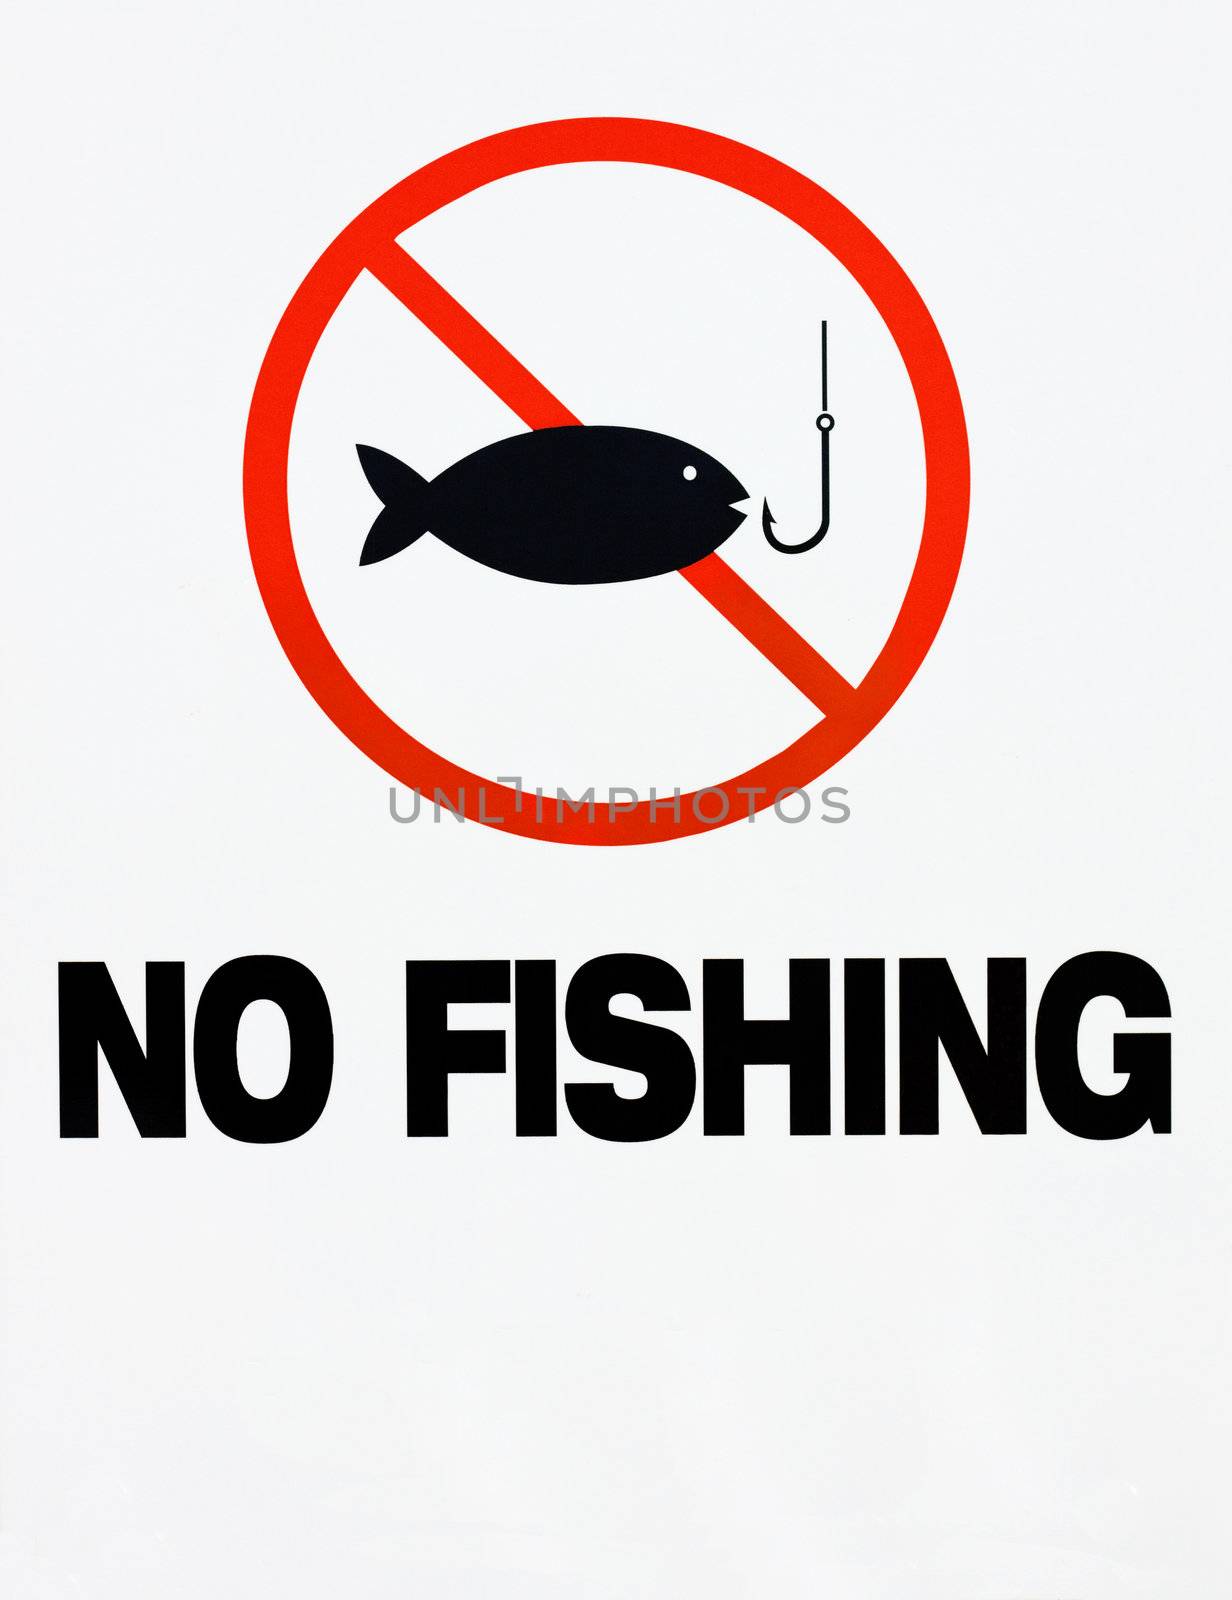 No fishing sign by Jaykayl